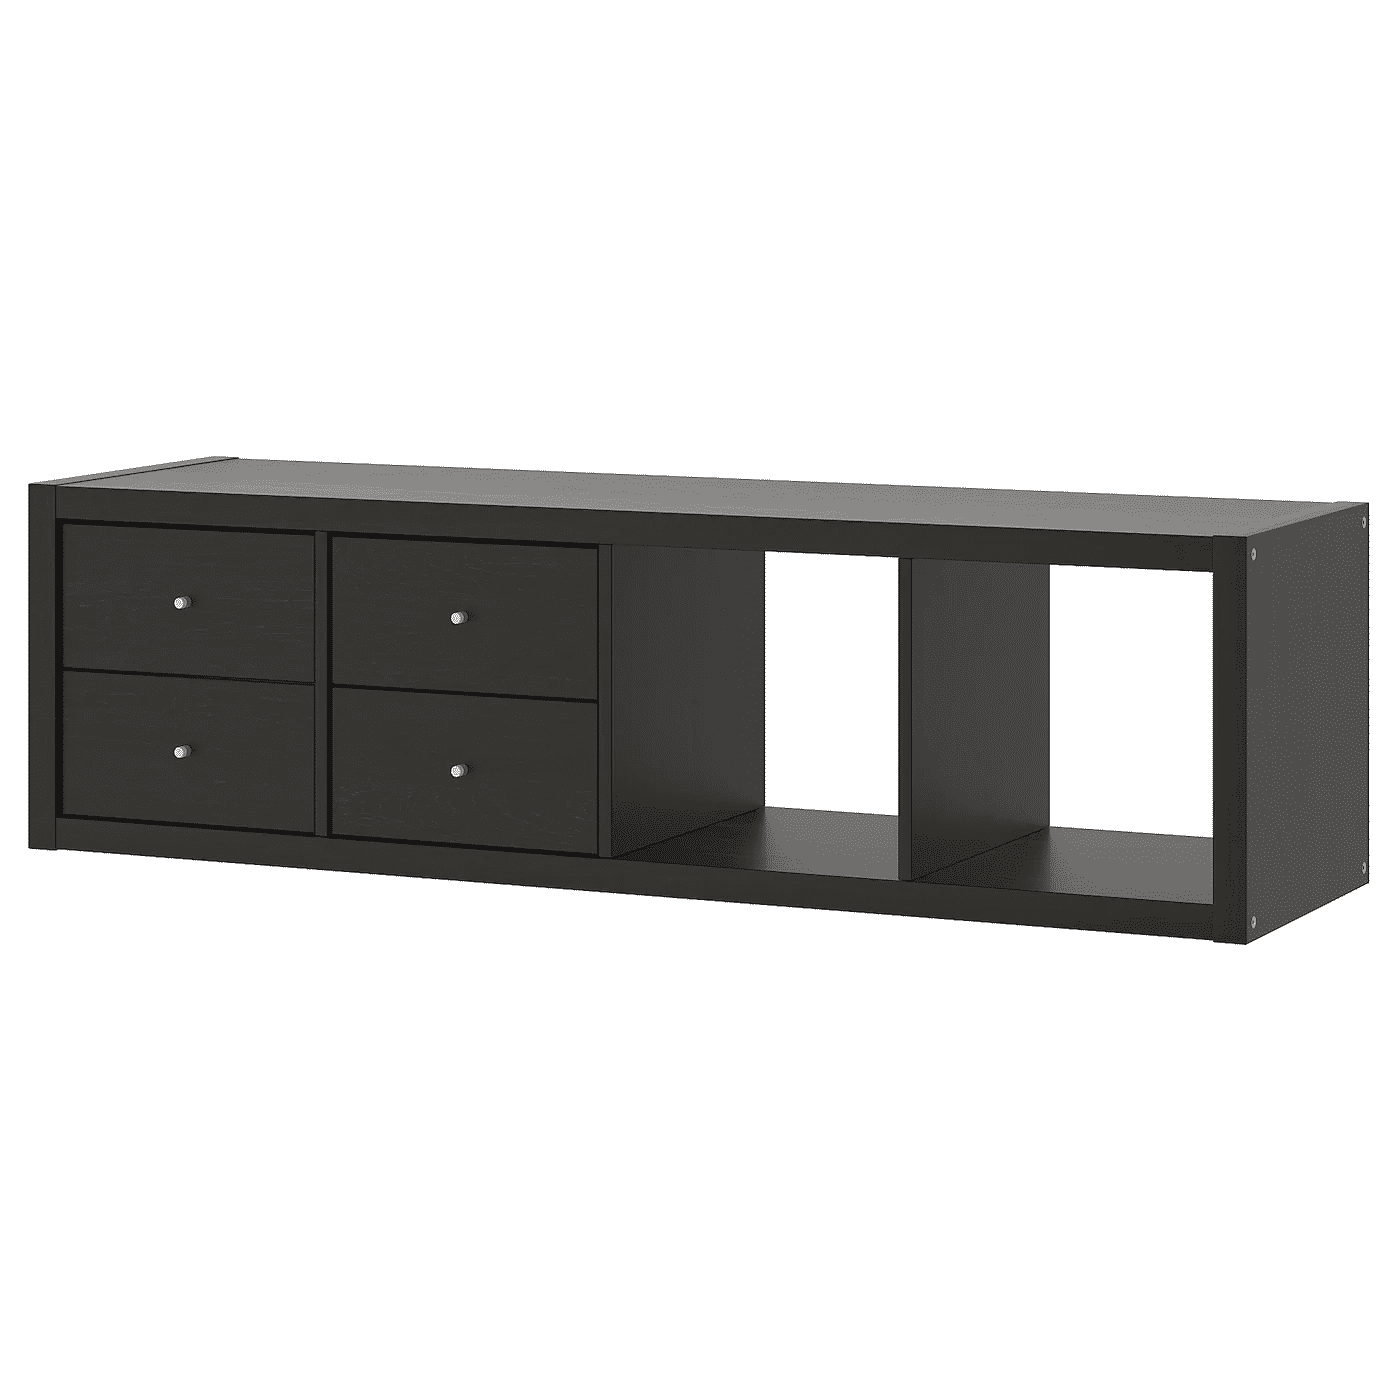 KALLAX Shelf unit with 2 inserts, black-brown